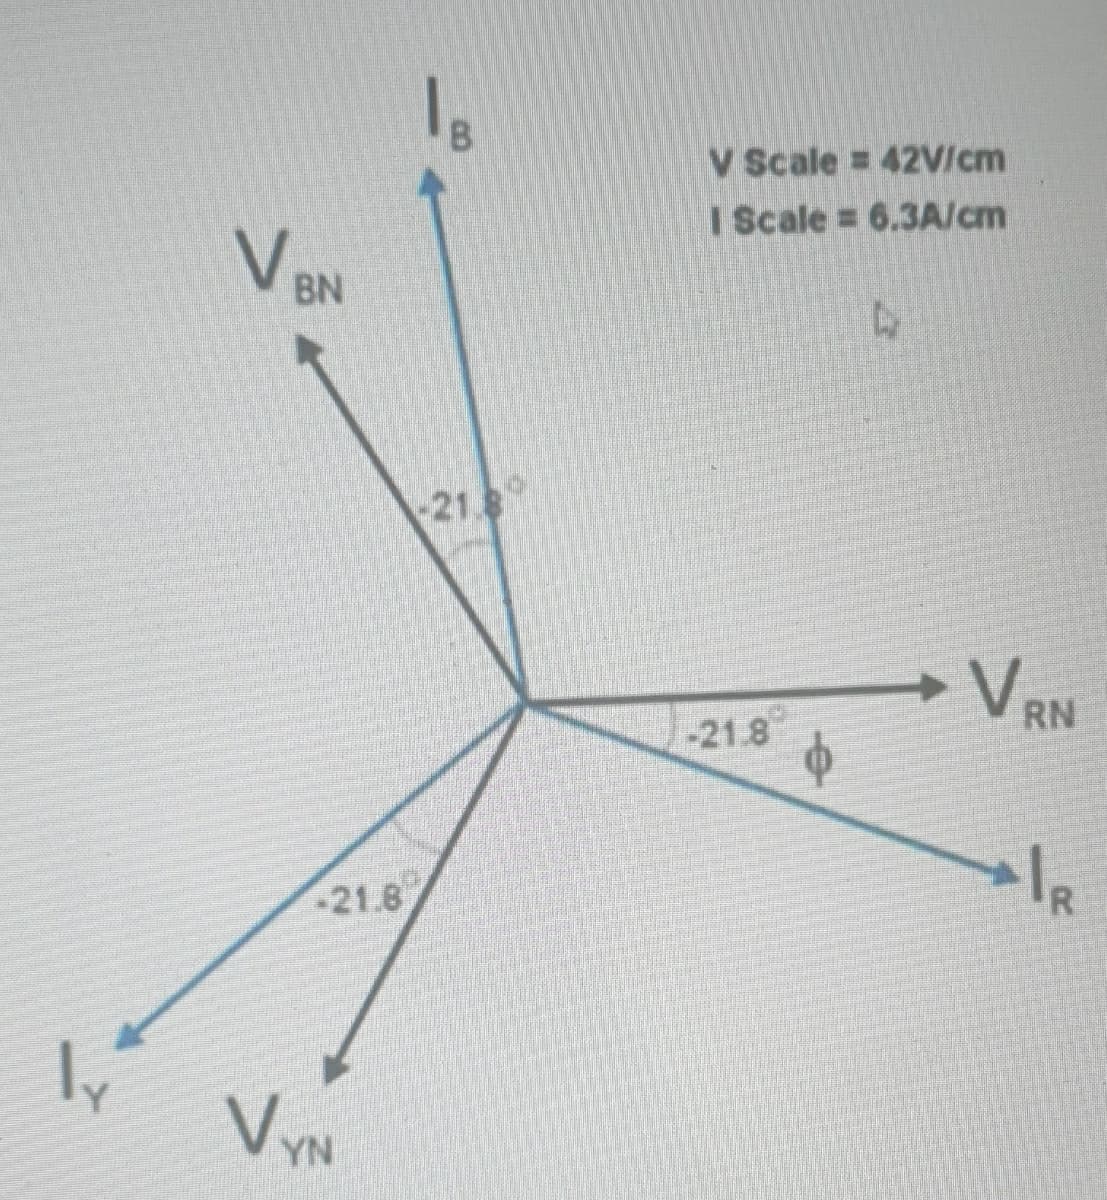 V Scale = 42V/cm
I Scale = 6.3A/cm
VBN
21.80
VRN
-21.8
R
21.8
VYN
